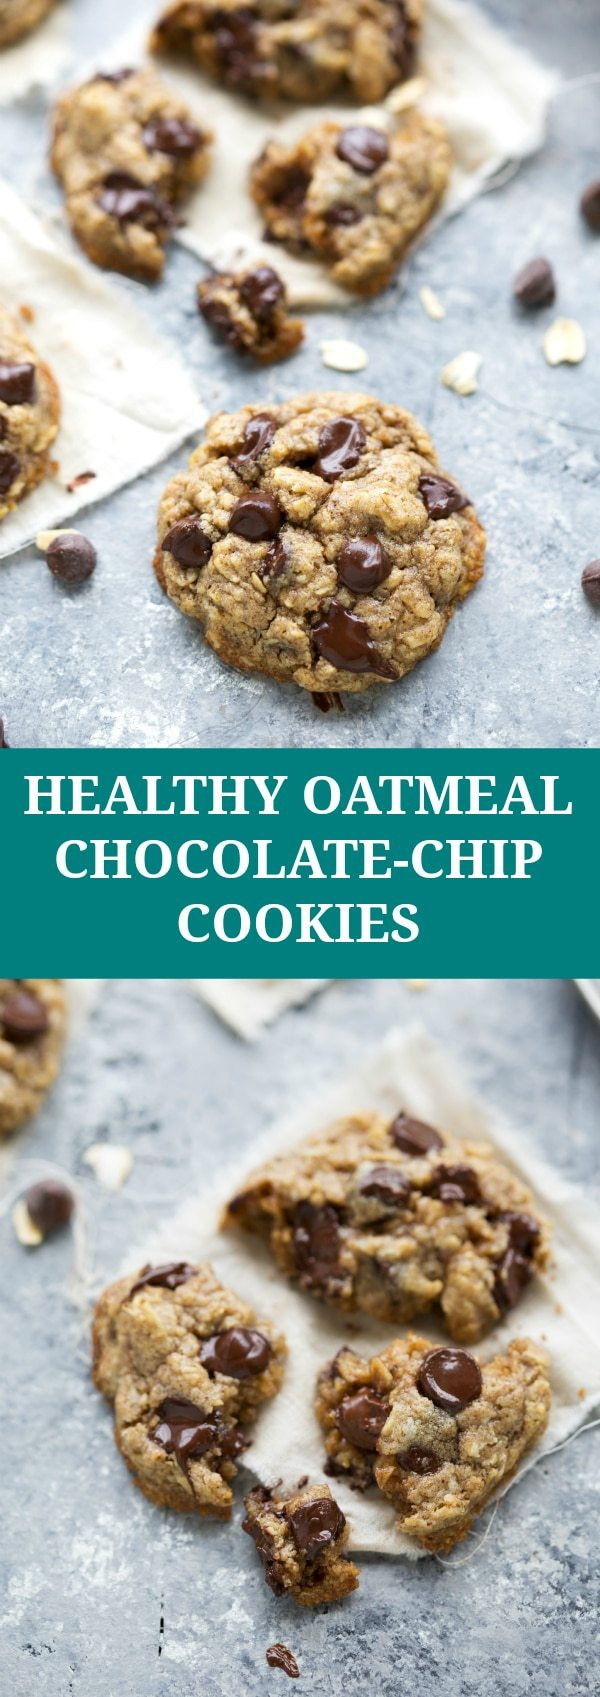 Best Healthy Oatmeal Cookies
 The Best Healthy Oatmeal Chocolate Chip Cookies Chelsea